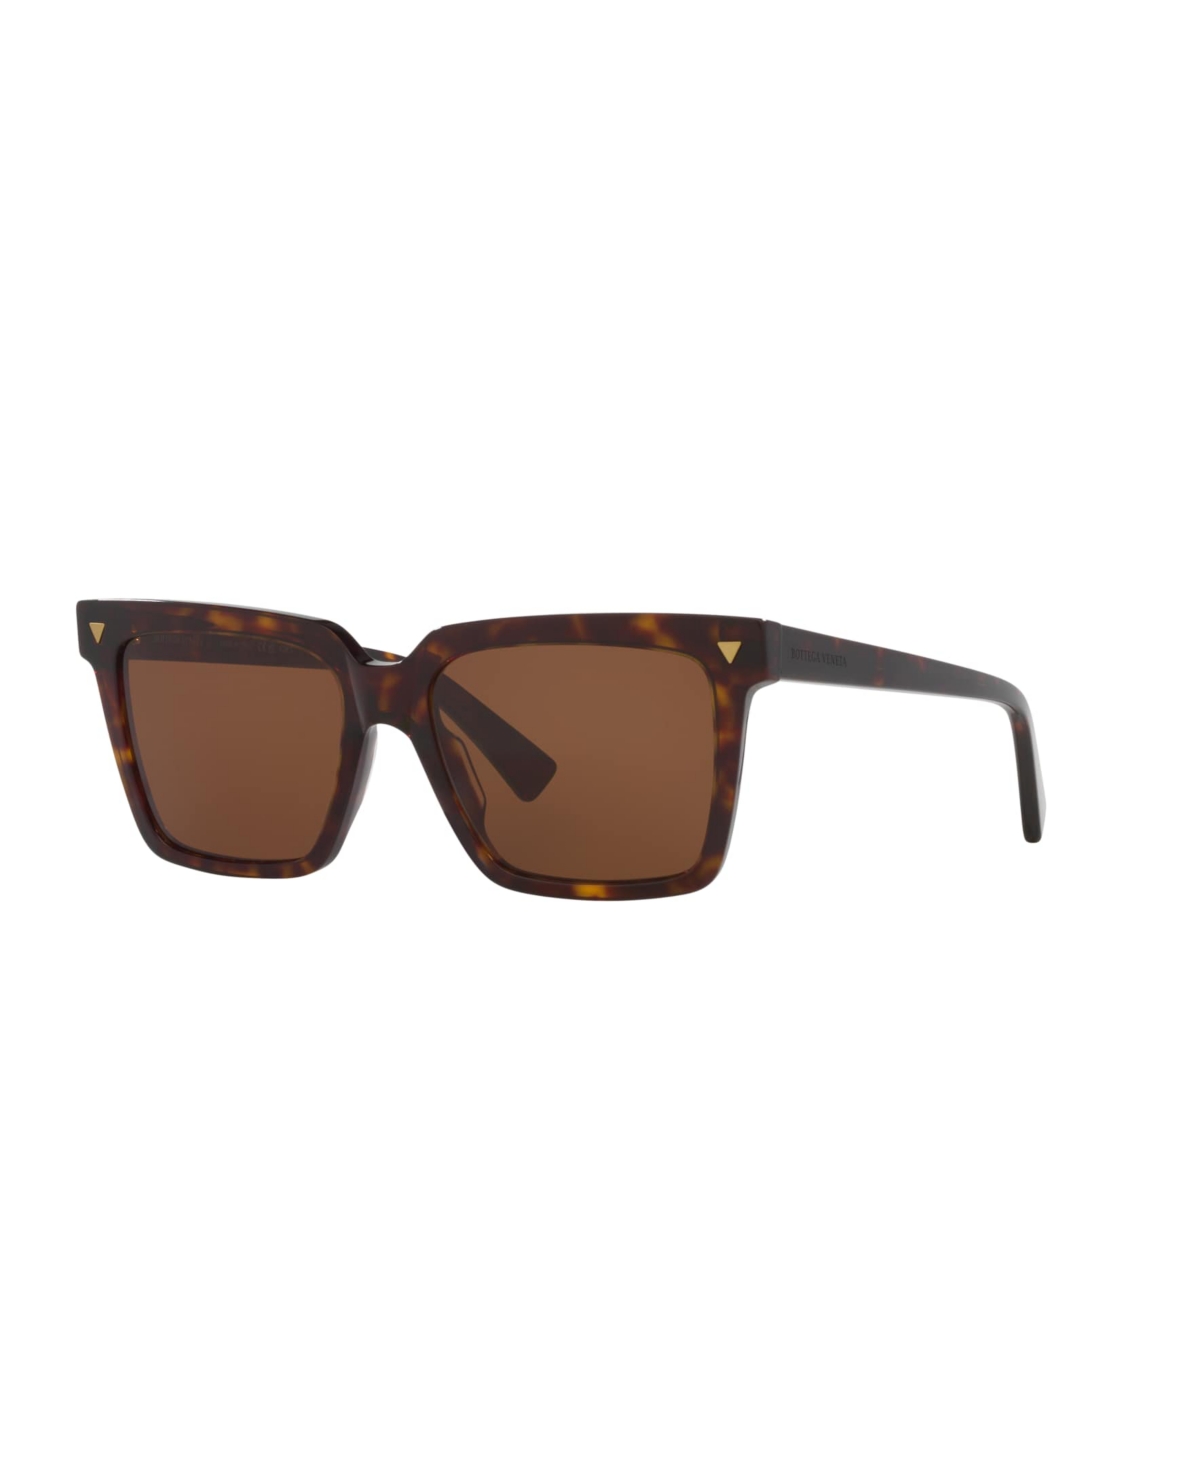 Women's Sunglasses, Bv1254S 6J000416 - Brown